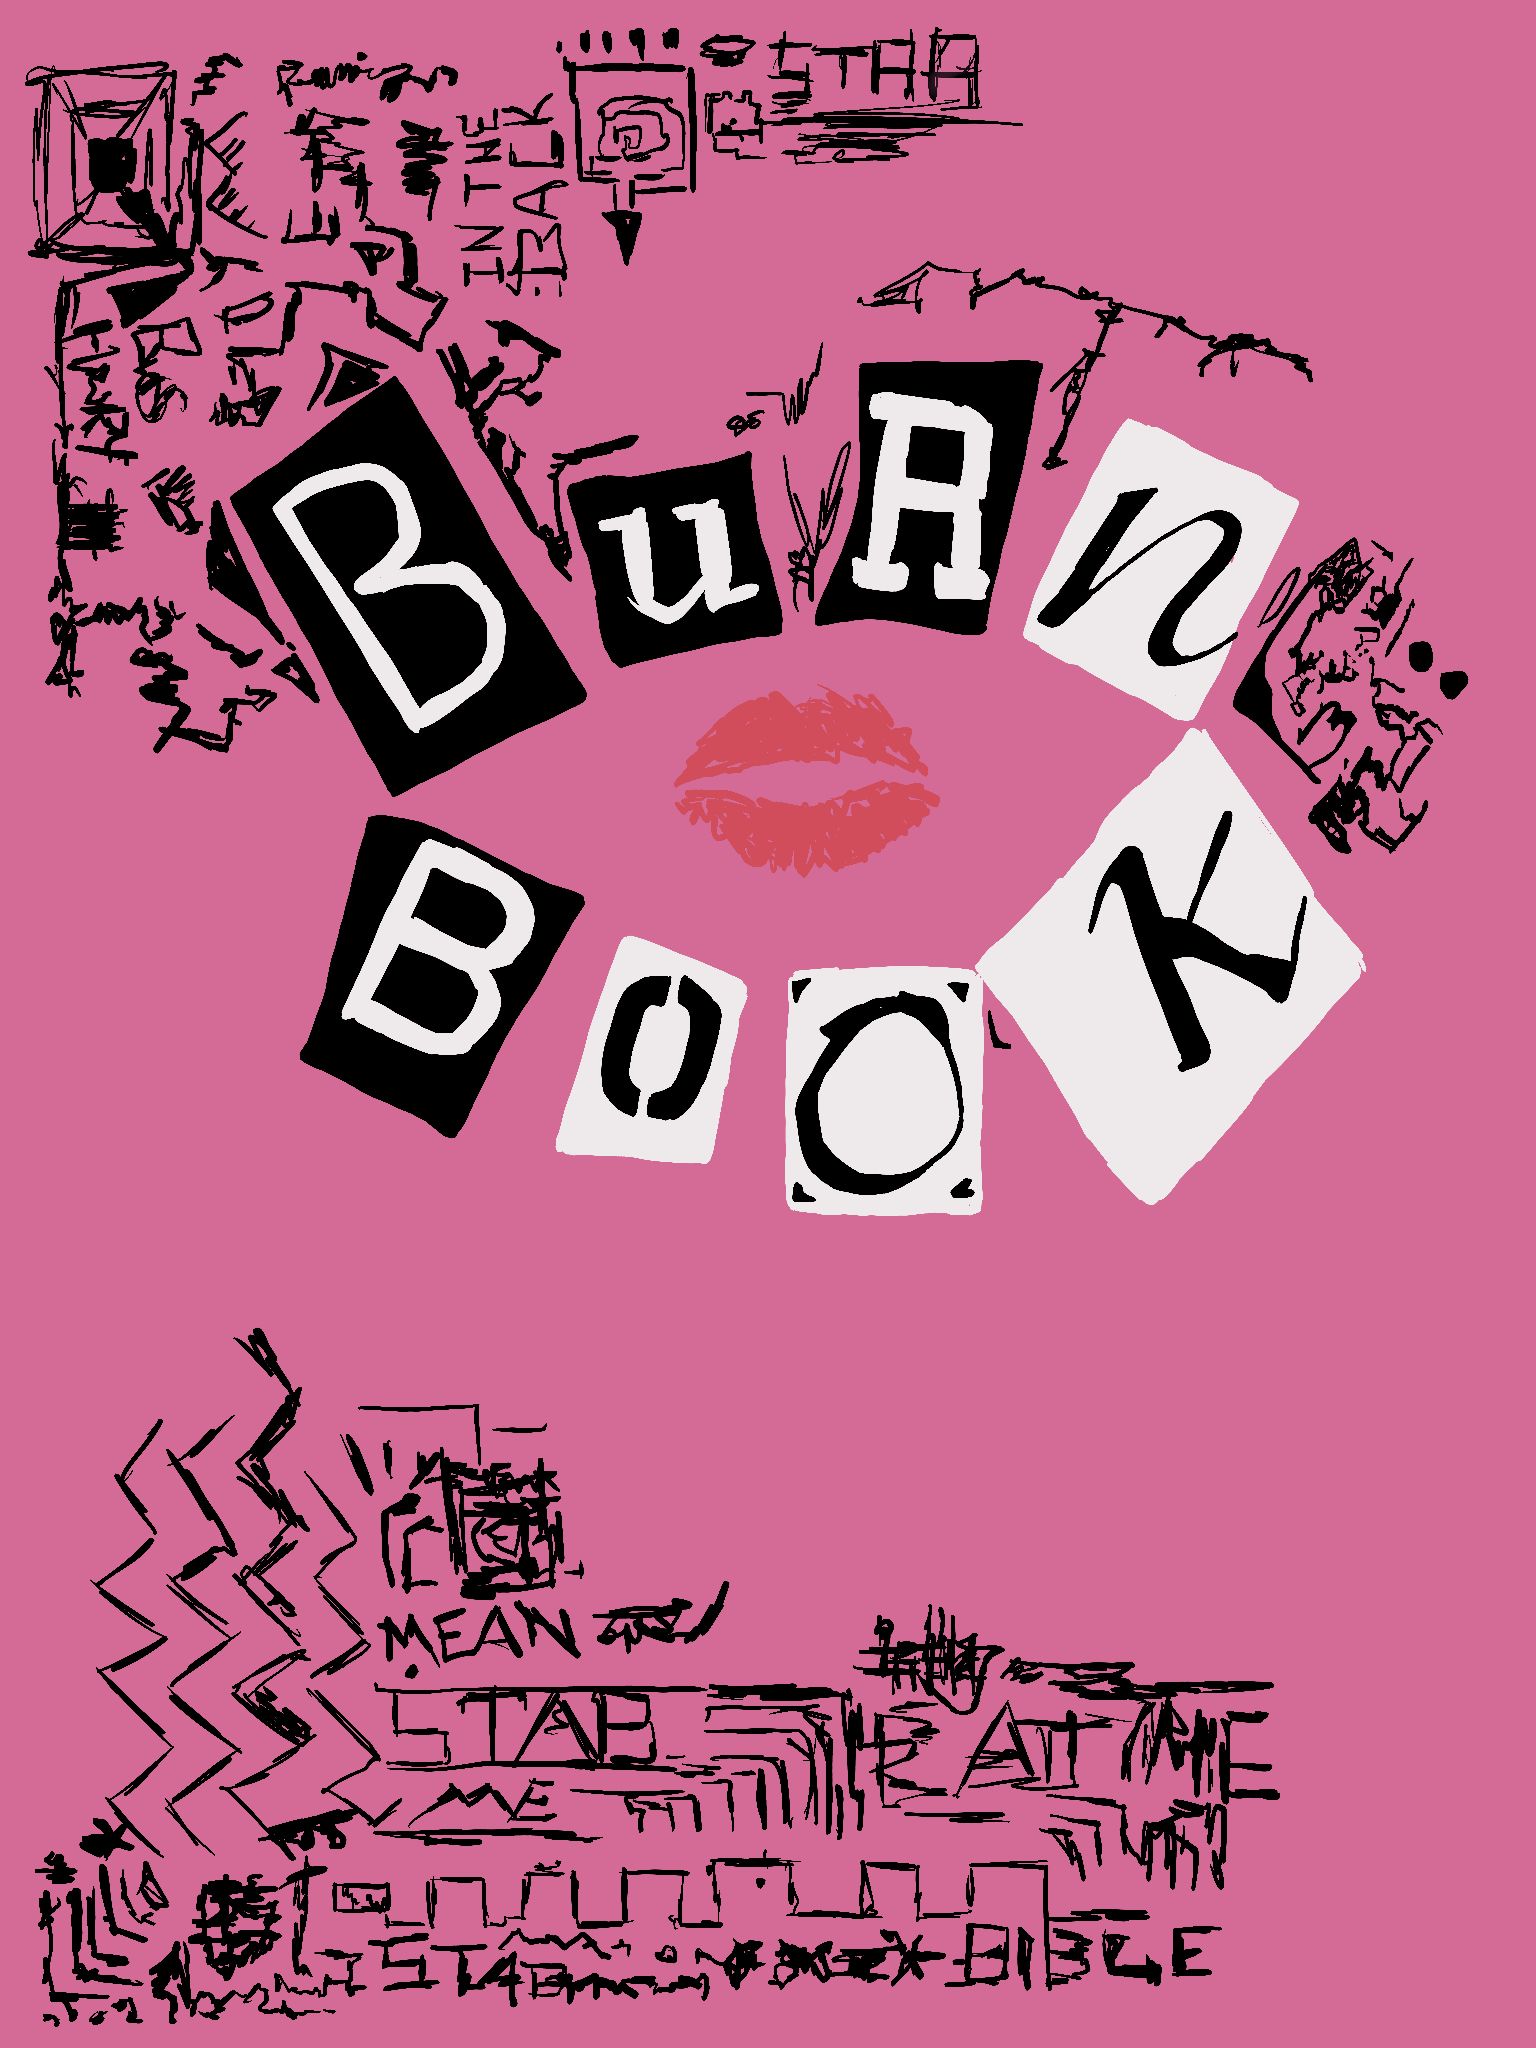 Burn book mean girls. Mean girls burn book, Storybook cosmetics, Mean girls